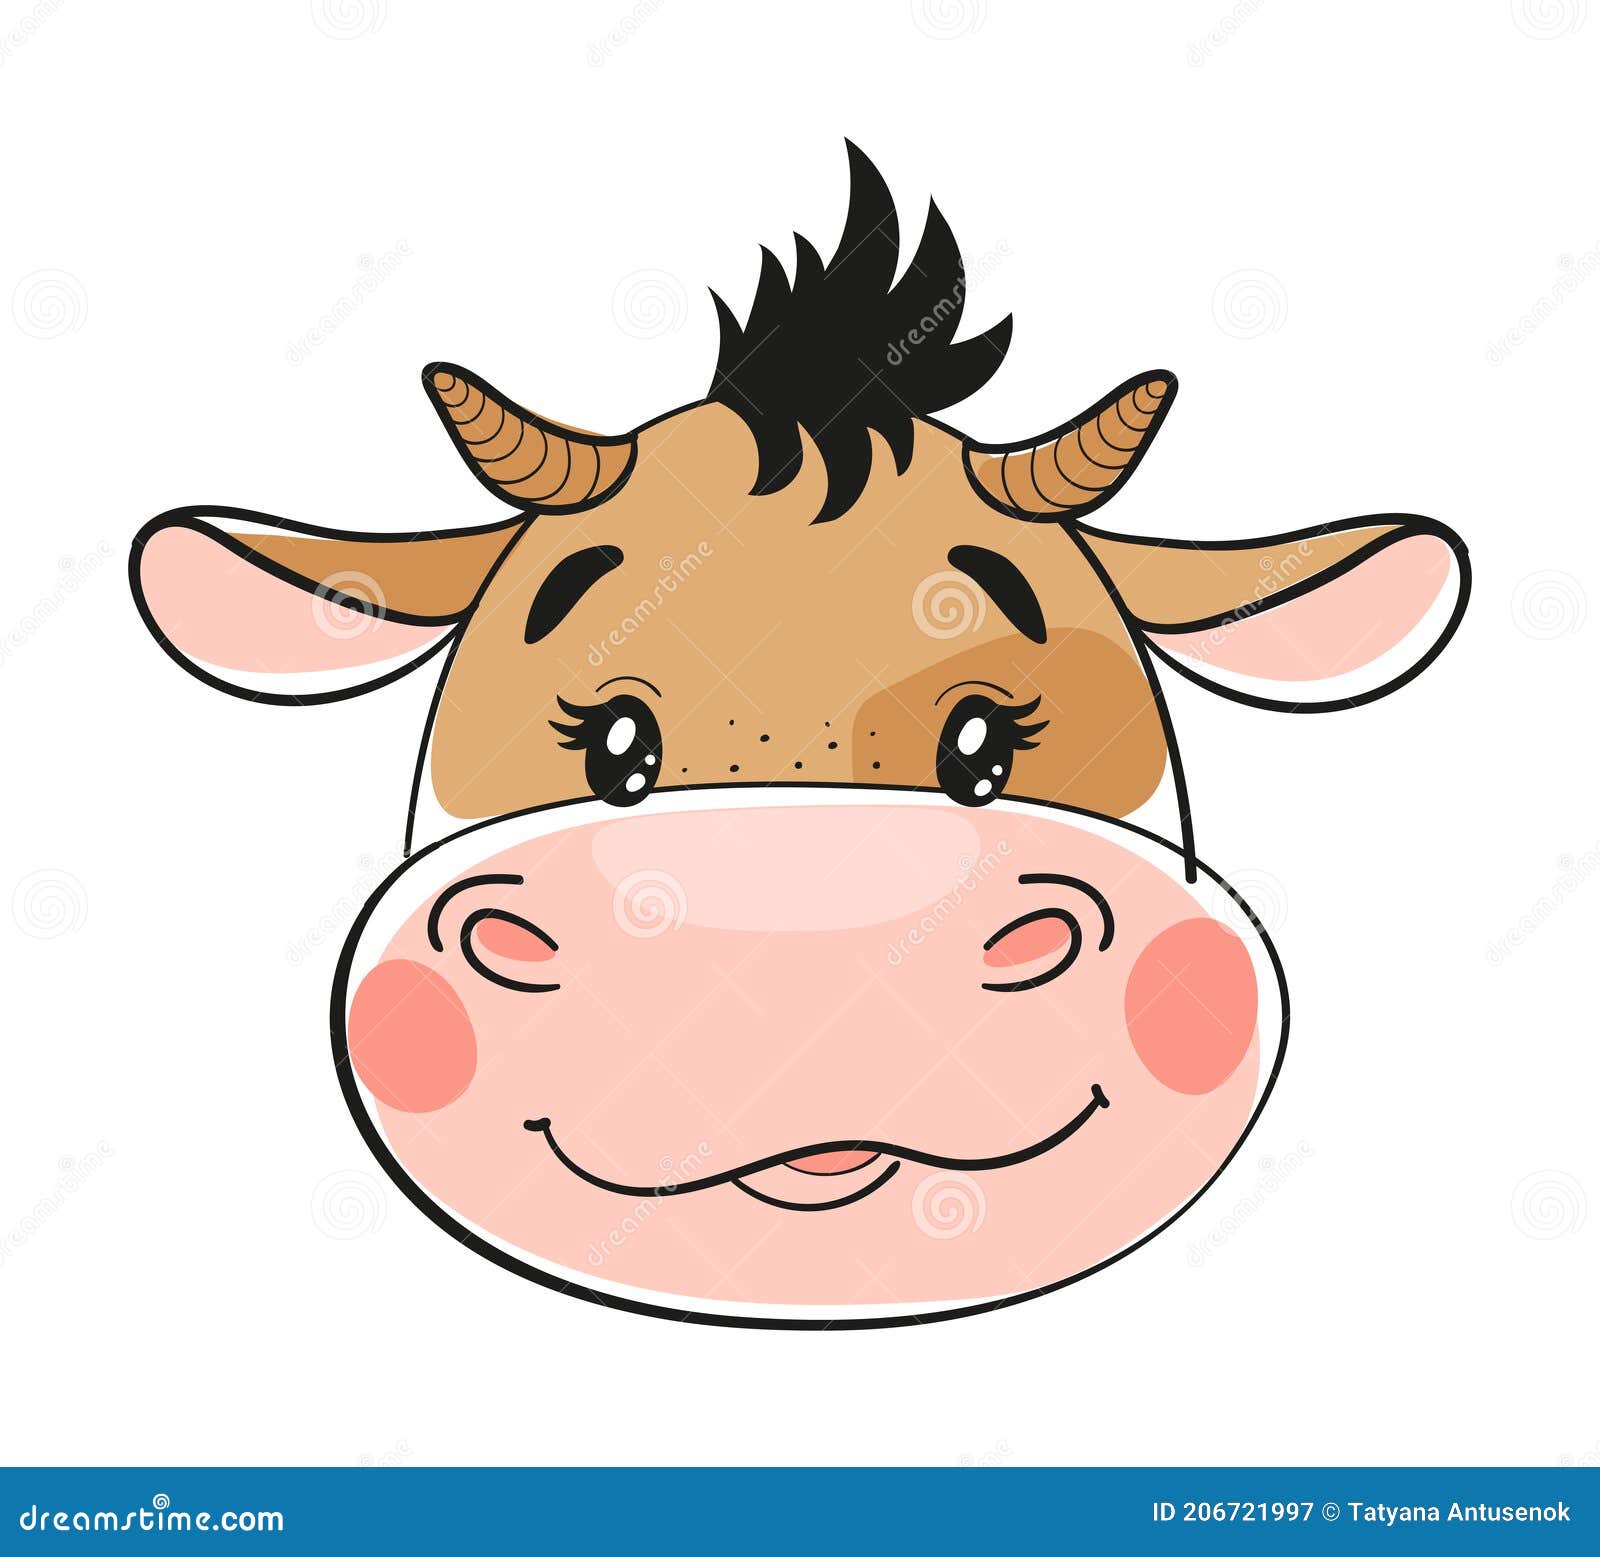 Bull Head with Horns, Flat Cartoon Design. Cute Baby Cow, Farm Animal,  Funny Wild Animal Face Stock Illustration - Illustration of funny, farm:  206721997